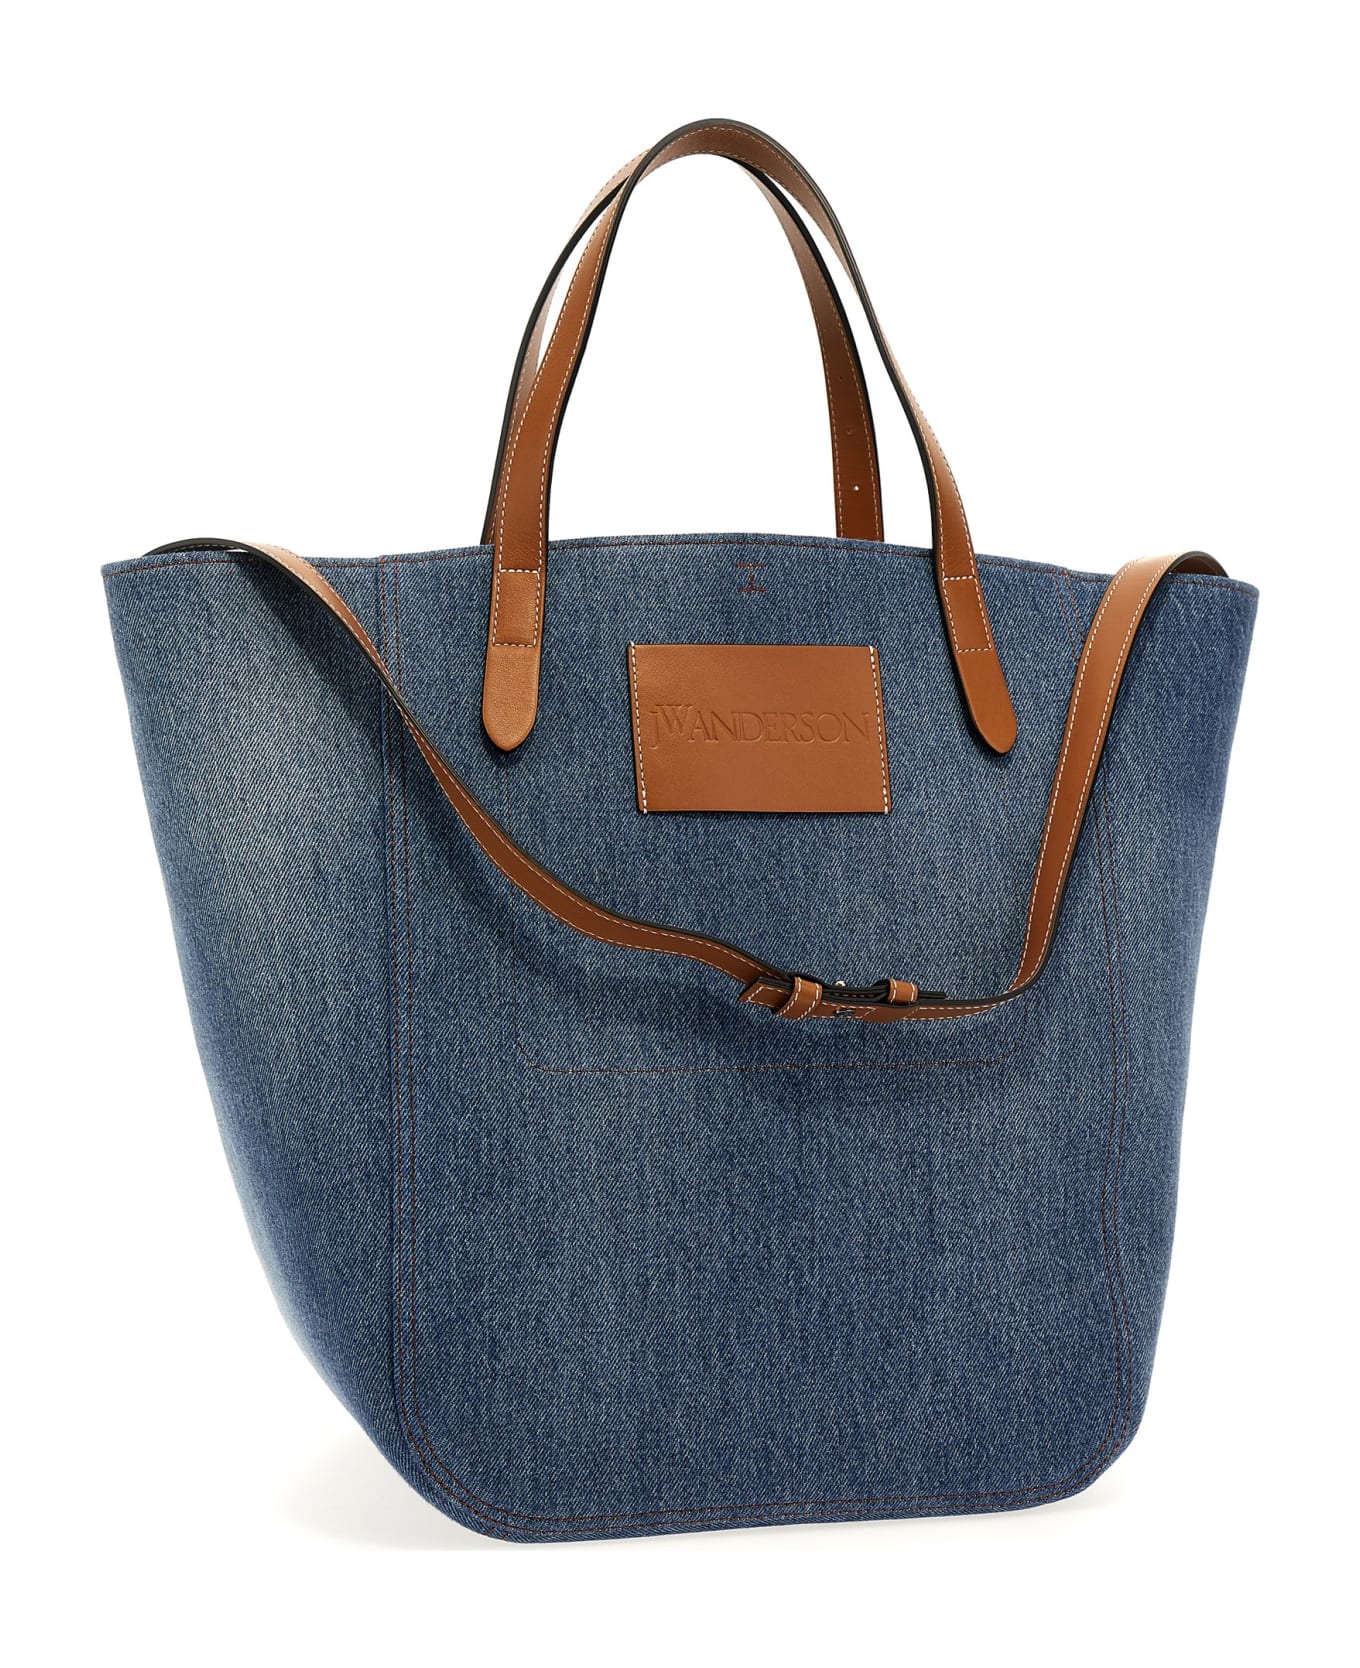 J.W. Anderson 'belt Tote Cabas' Shopping Bag - Blue